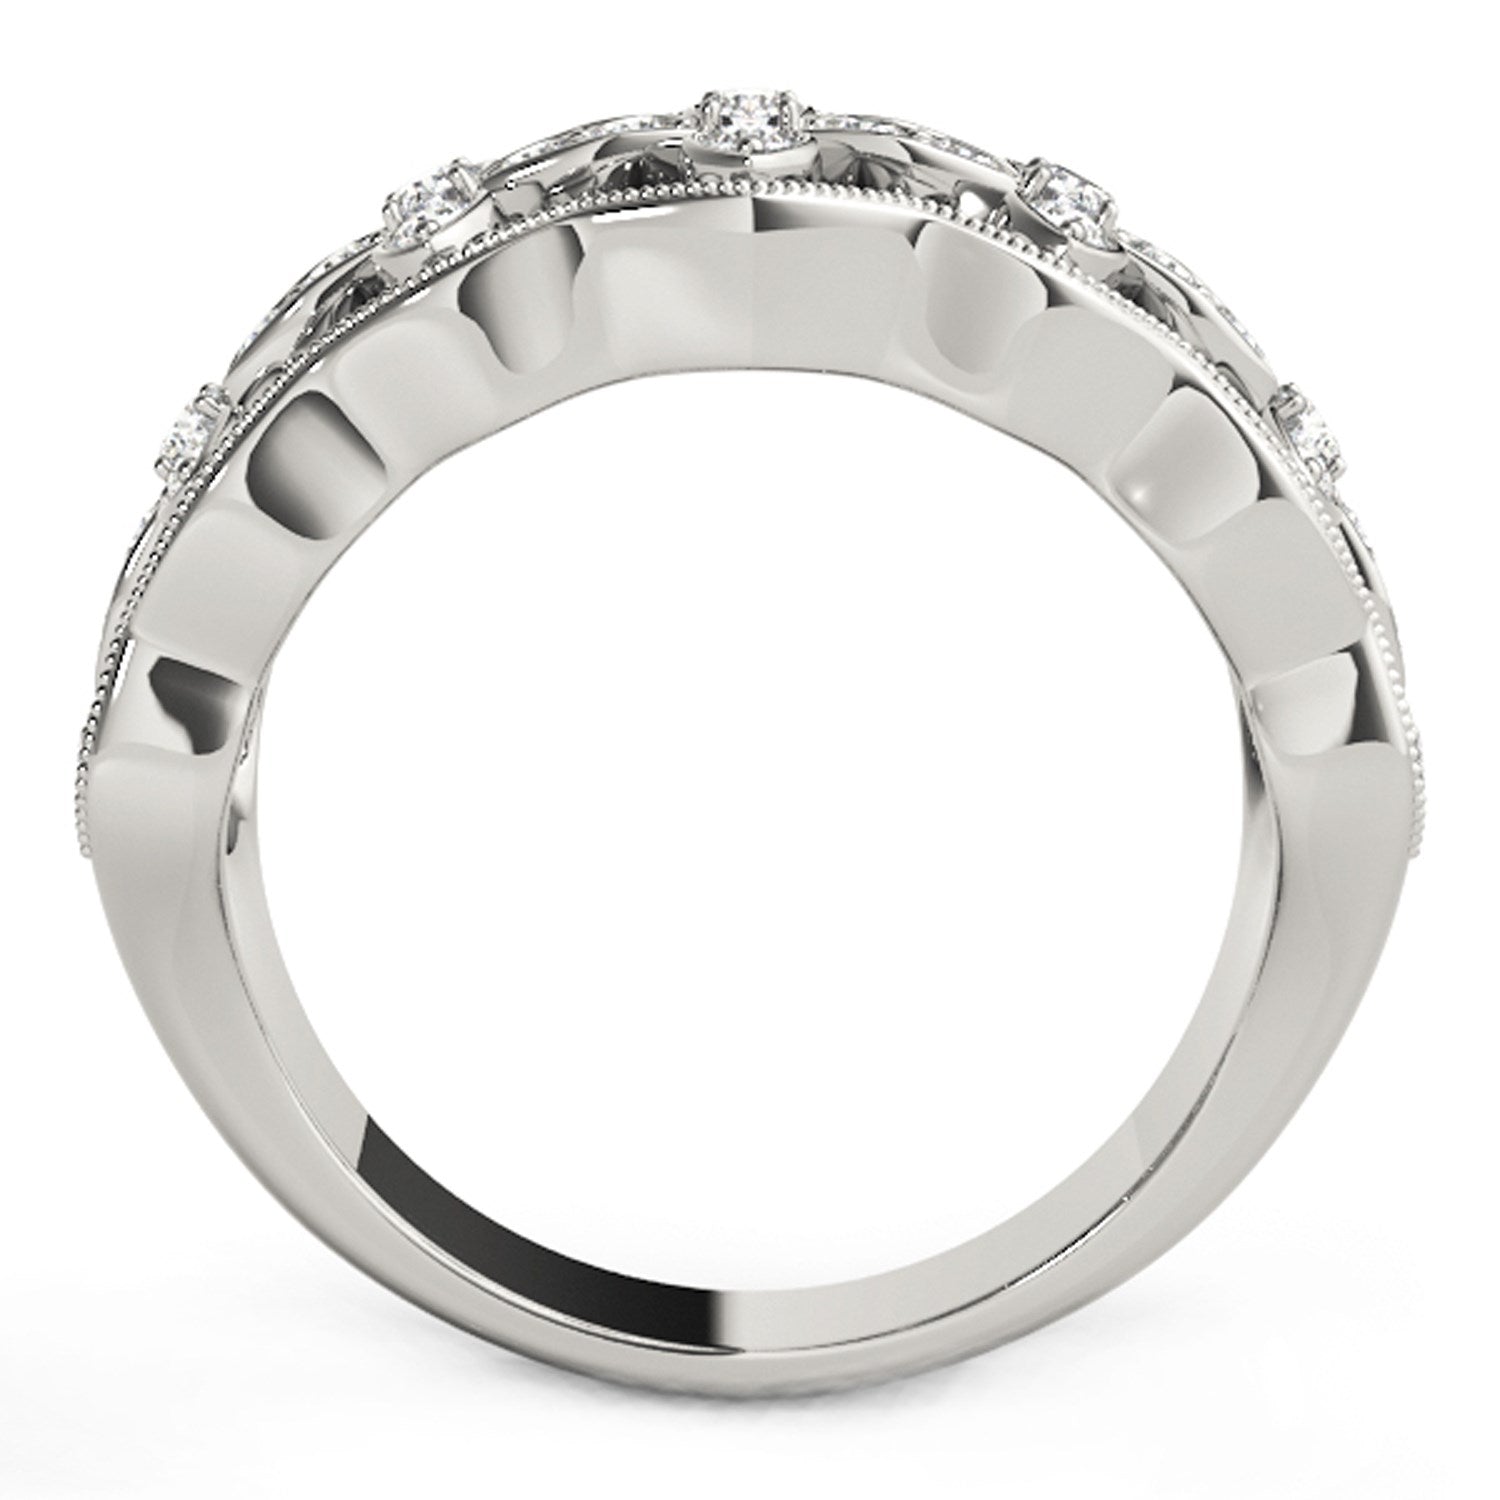 Diamond Studded Four Leaf Clover Motif Ring In 14K White Gold 1 4 Cttw 87677-3